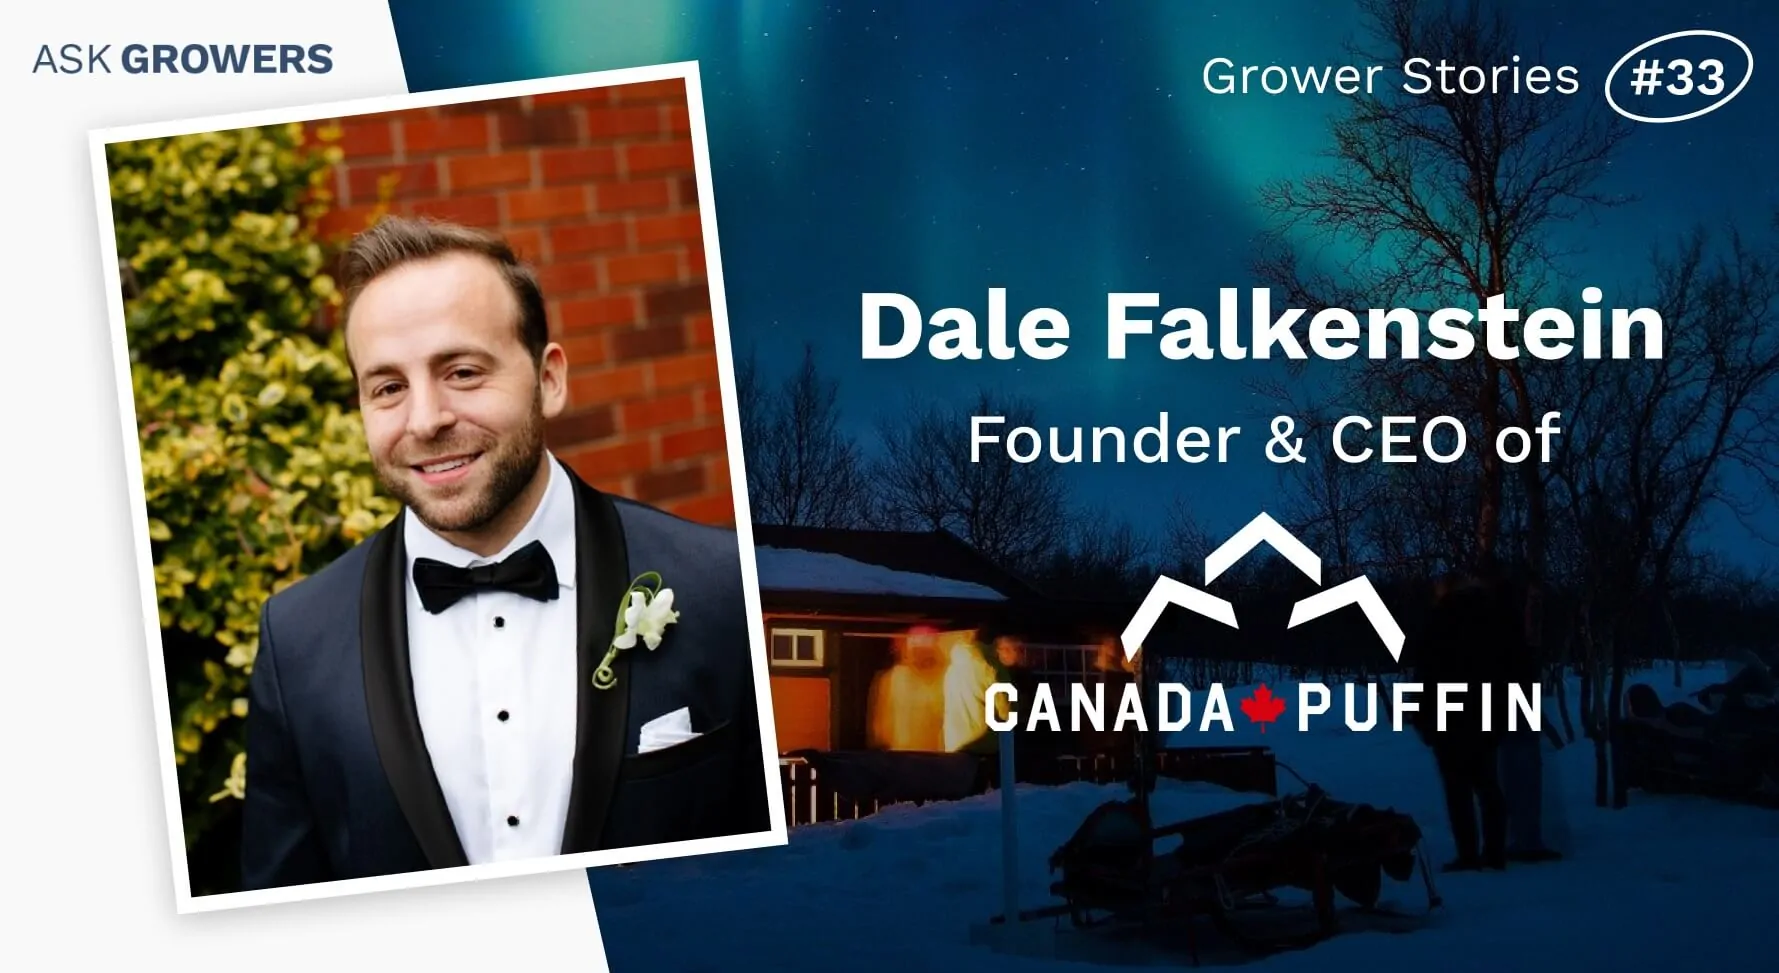 Grower Stories #33: Dale Falkenstein